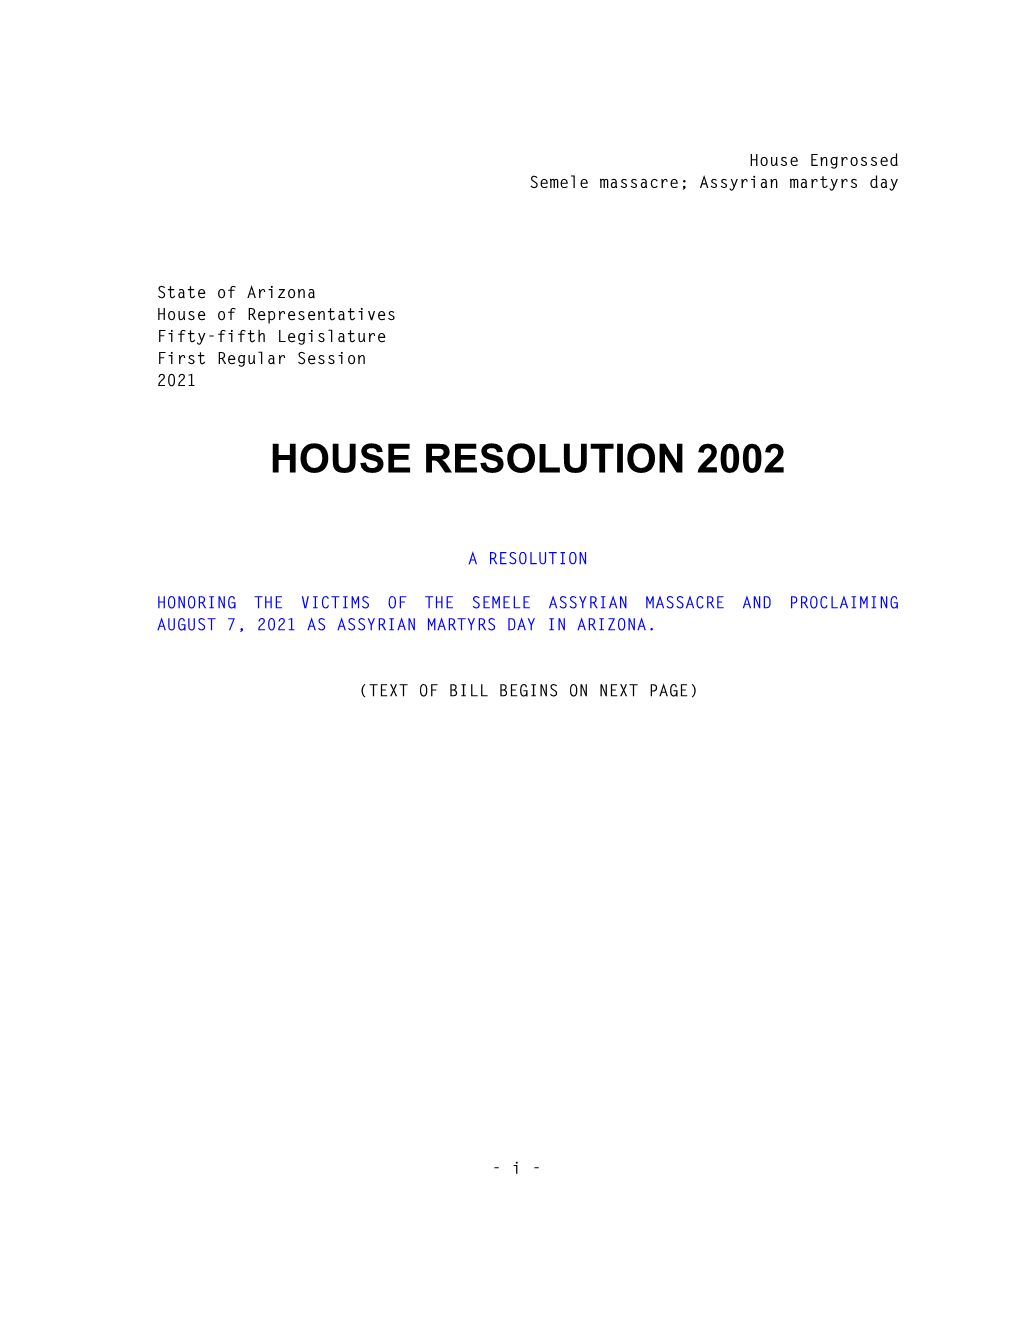 House Resolution 2002